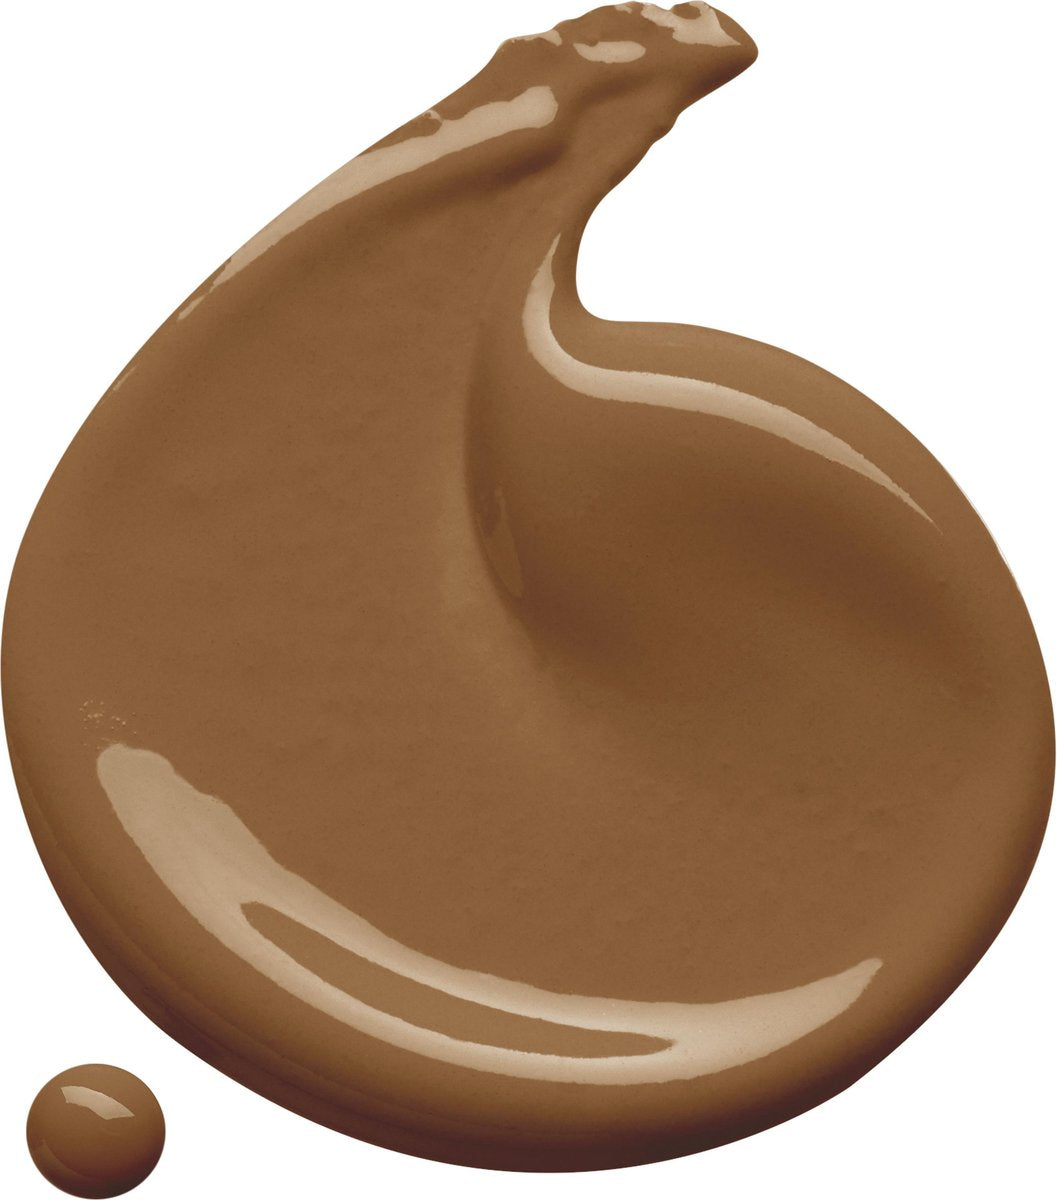 Buy Bourjois Always Fabulous 24H Liquid Foundation - 600 Chocolate in Pakistan